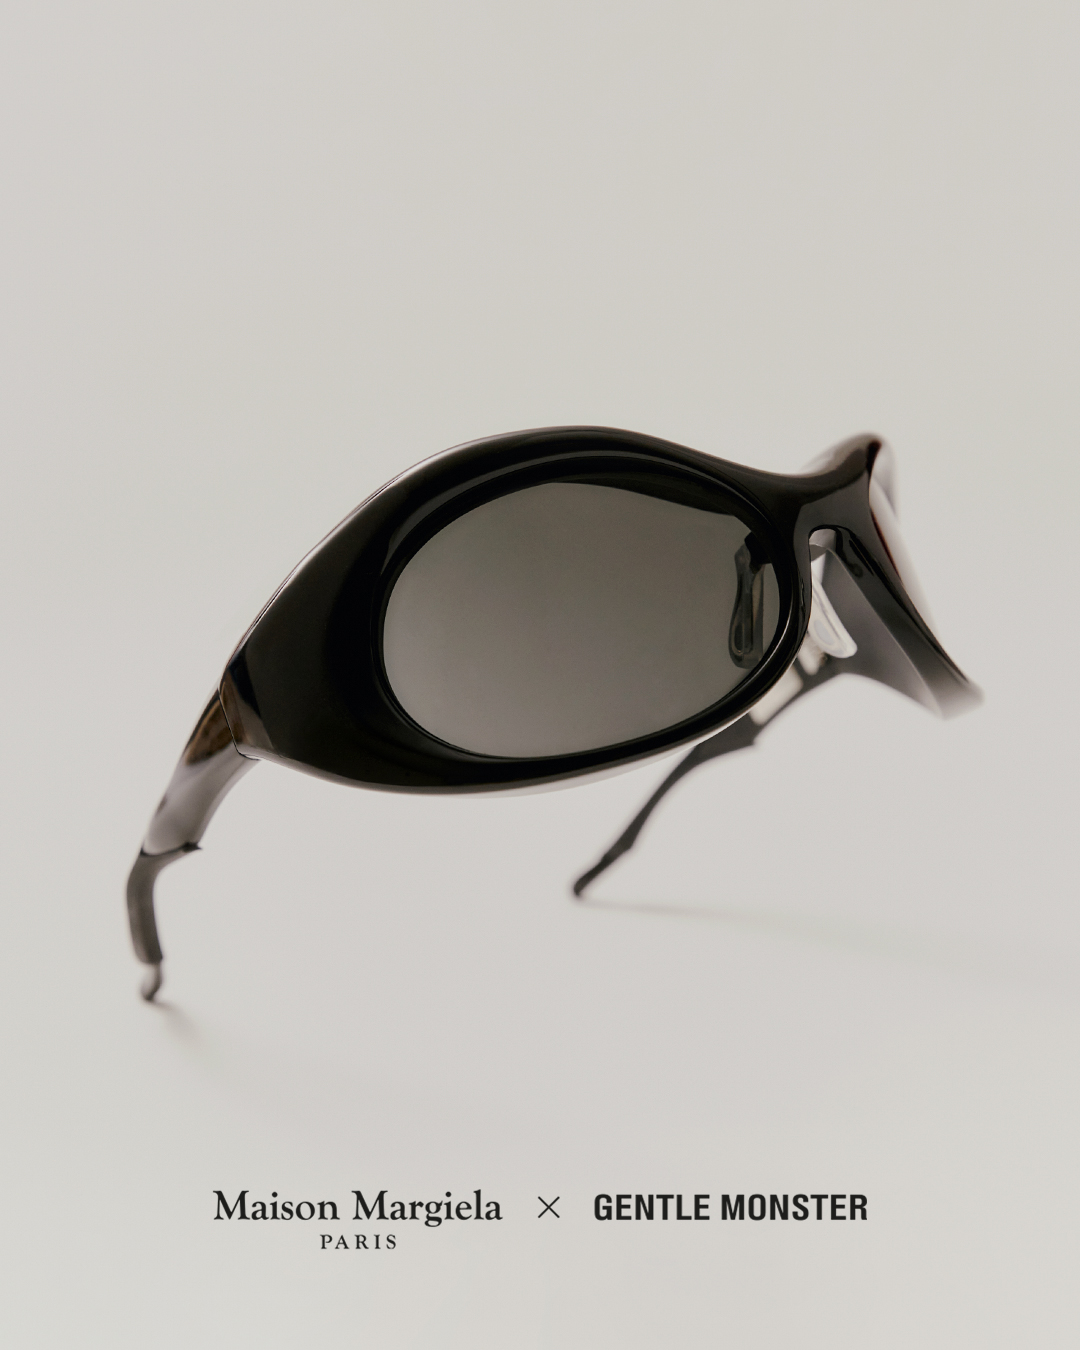 Maison MargielaとGENTLE MONSTERによるコラボレーションアイウェアが2